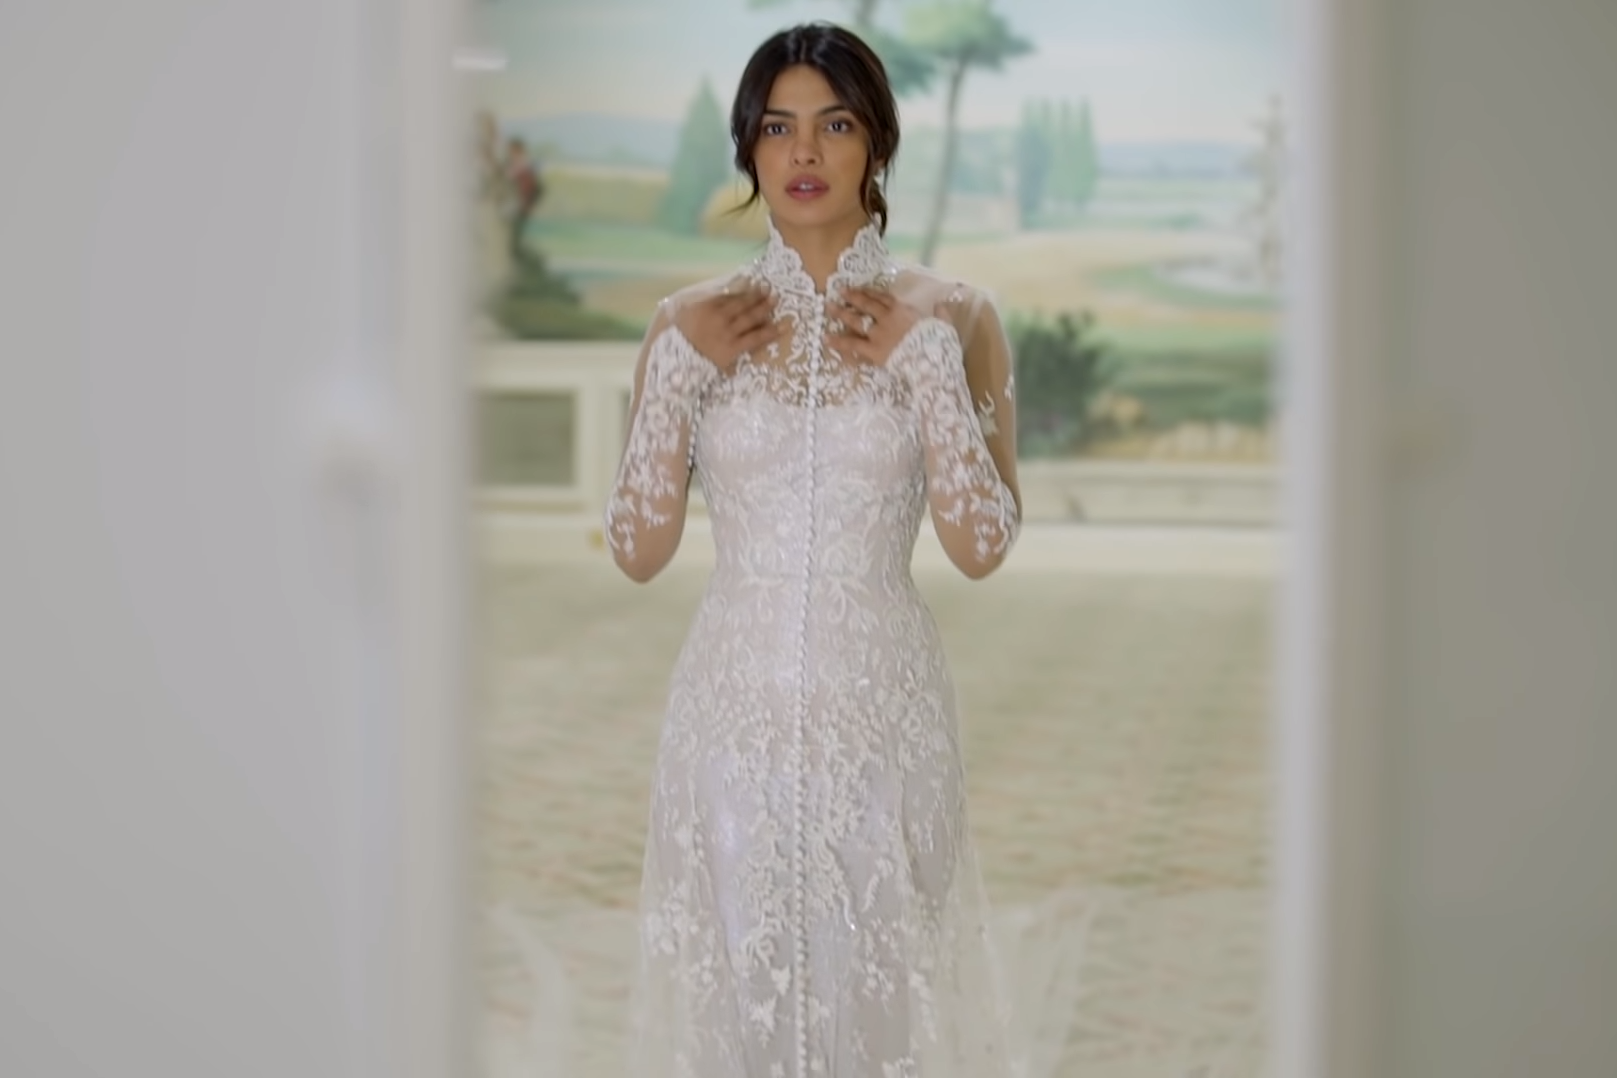 Priyanka Chopra reacts to wedding dress 